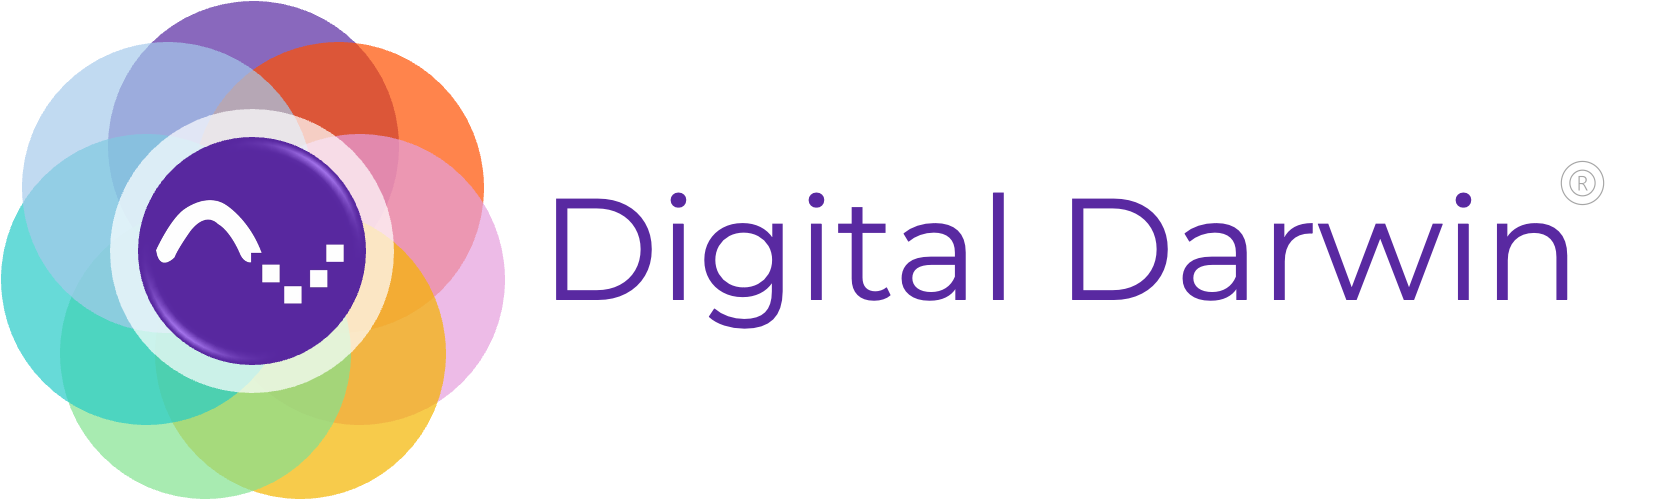 Digital Darwin Logo